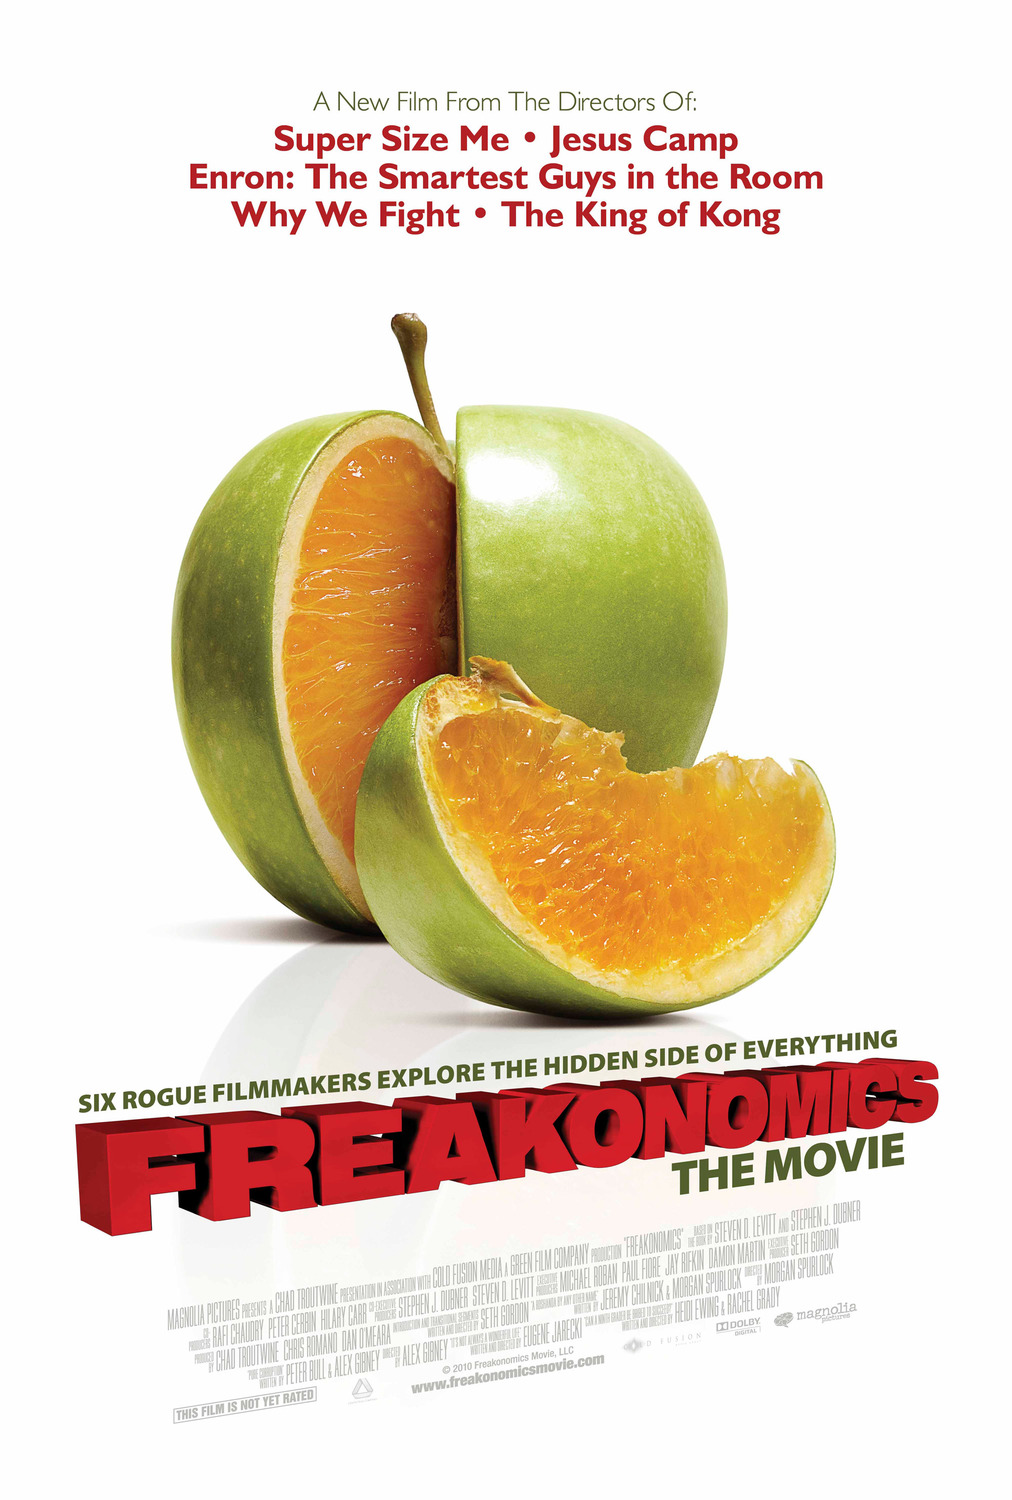 Extra Large Movie Poster Image for Freakonomics 